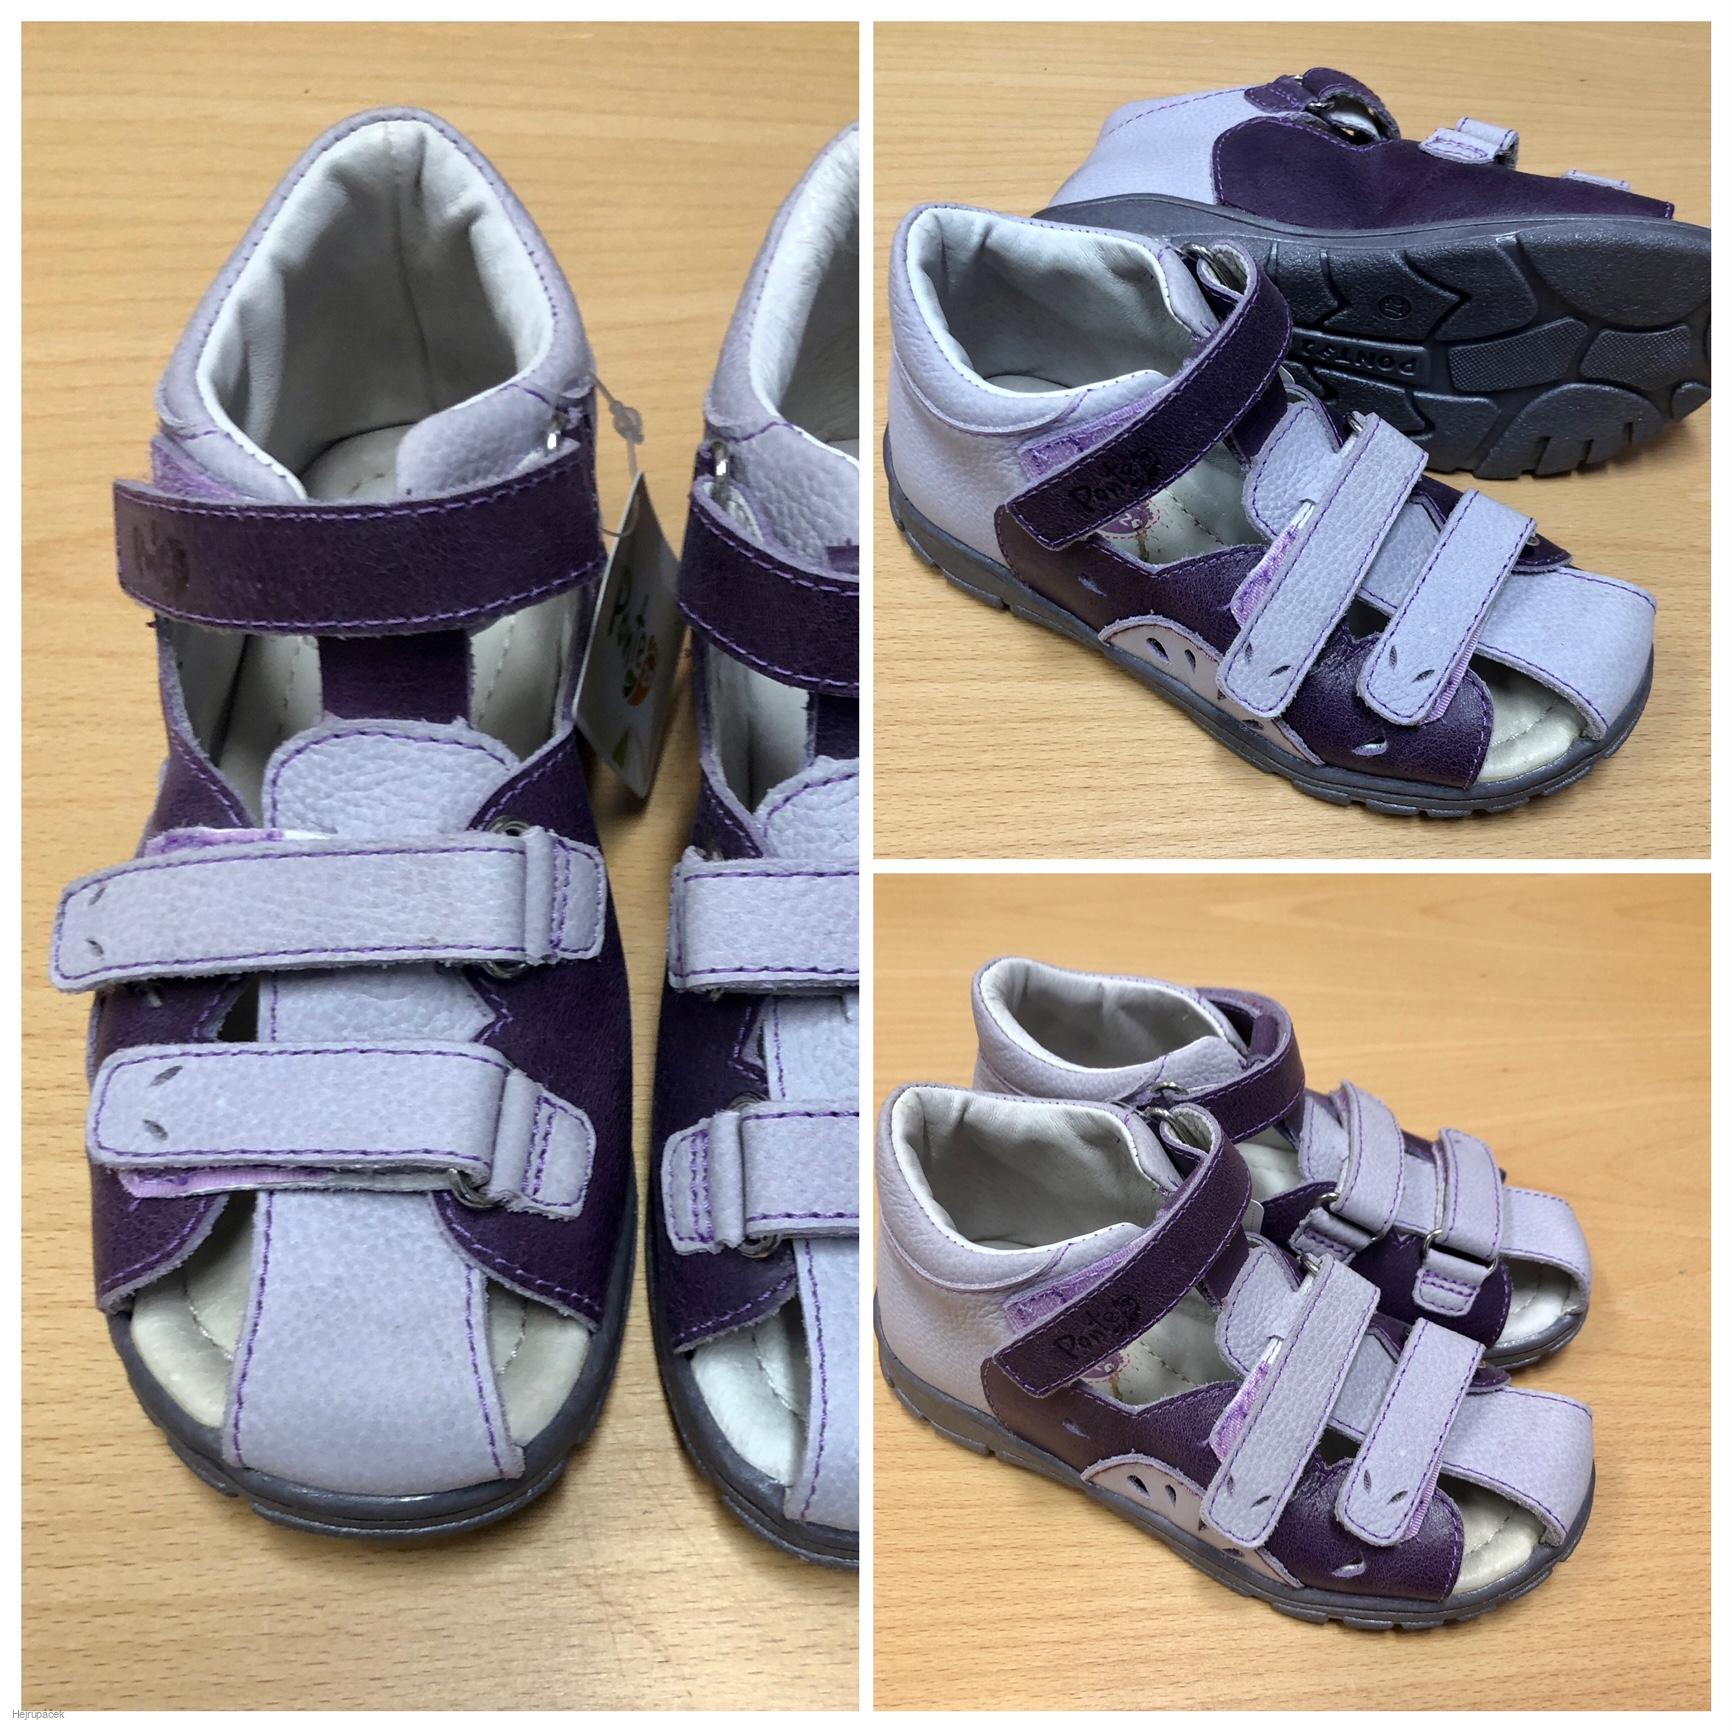 Ponte 20 dívčí sandálky DA05-1-506AM lavender vel.27